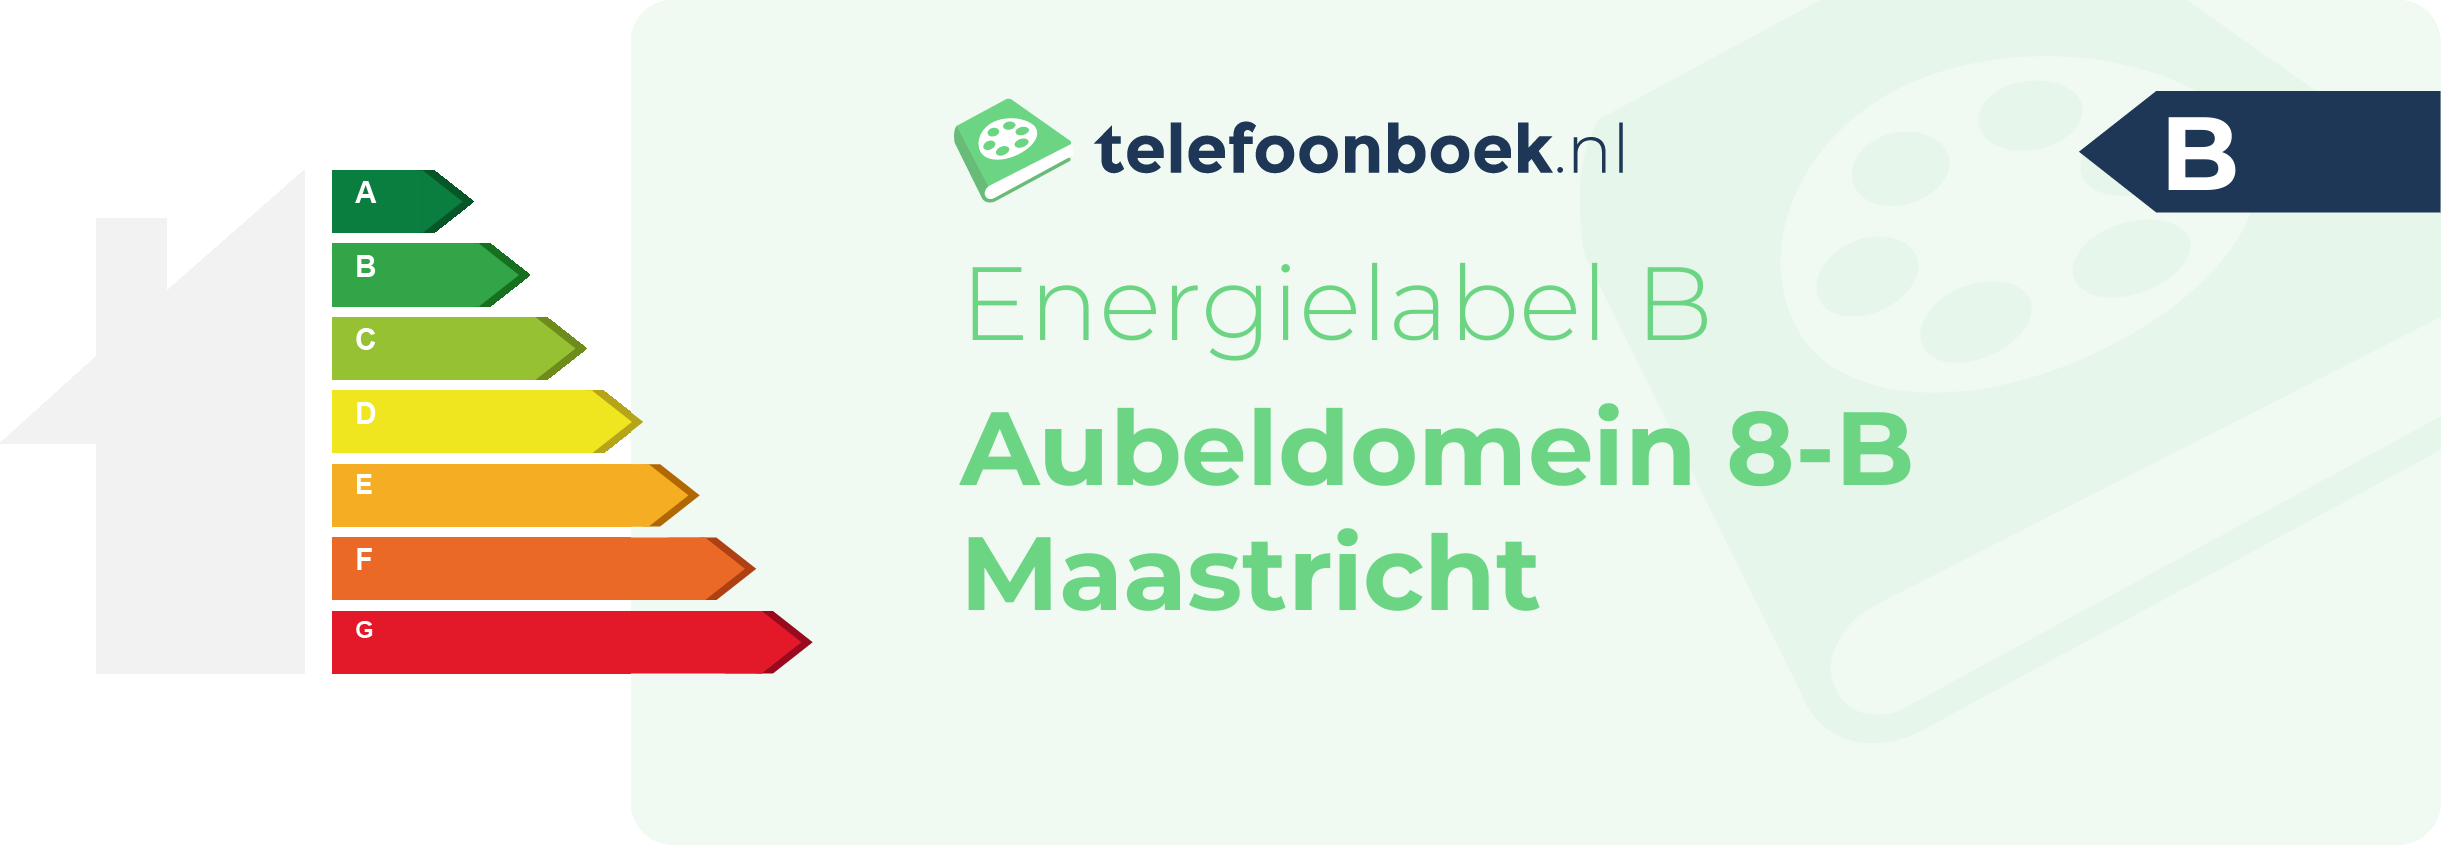 Energielabel Aubeldomein 8-B Maastricht